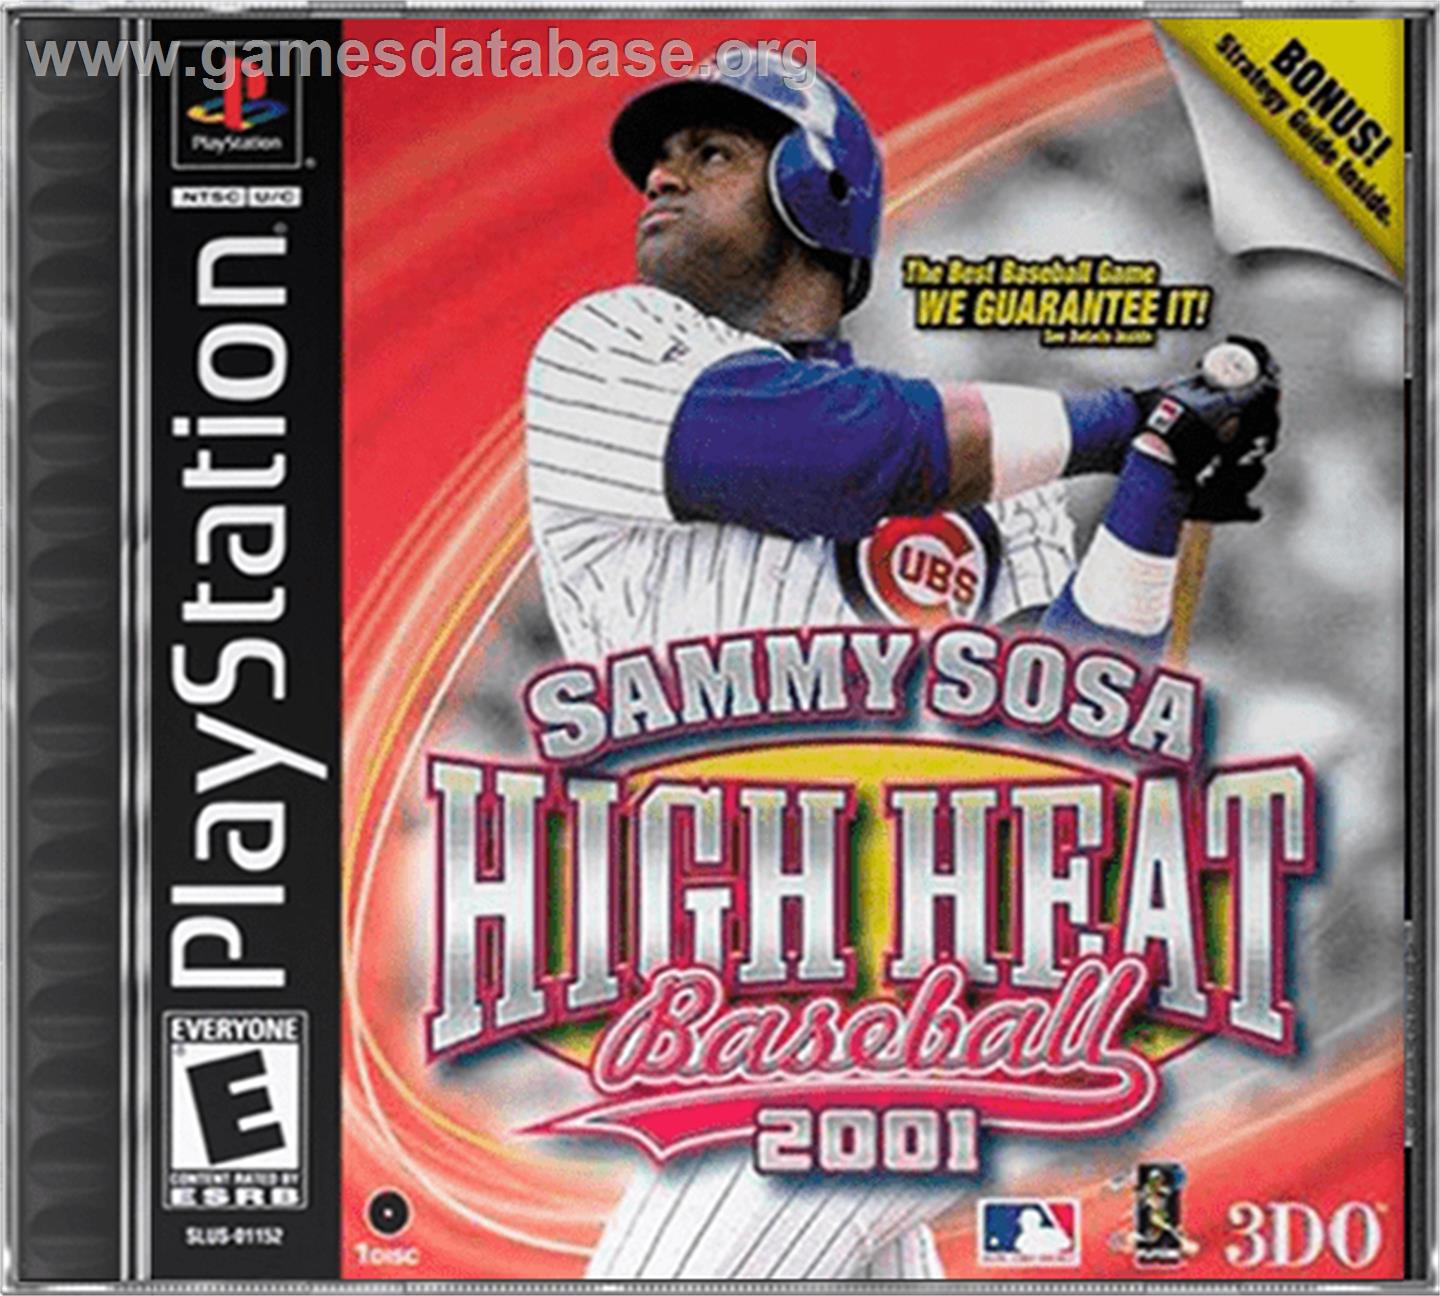 Sammy Sosa High Heat Baseball 2001 - Sony Playstation - Artwork - Box